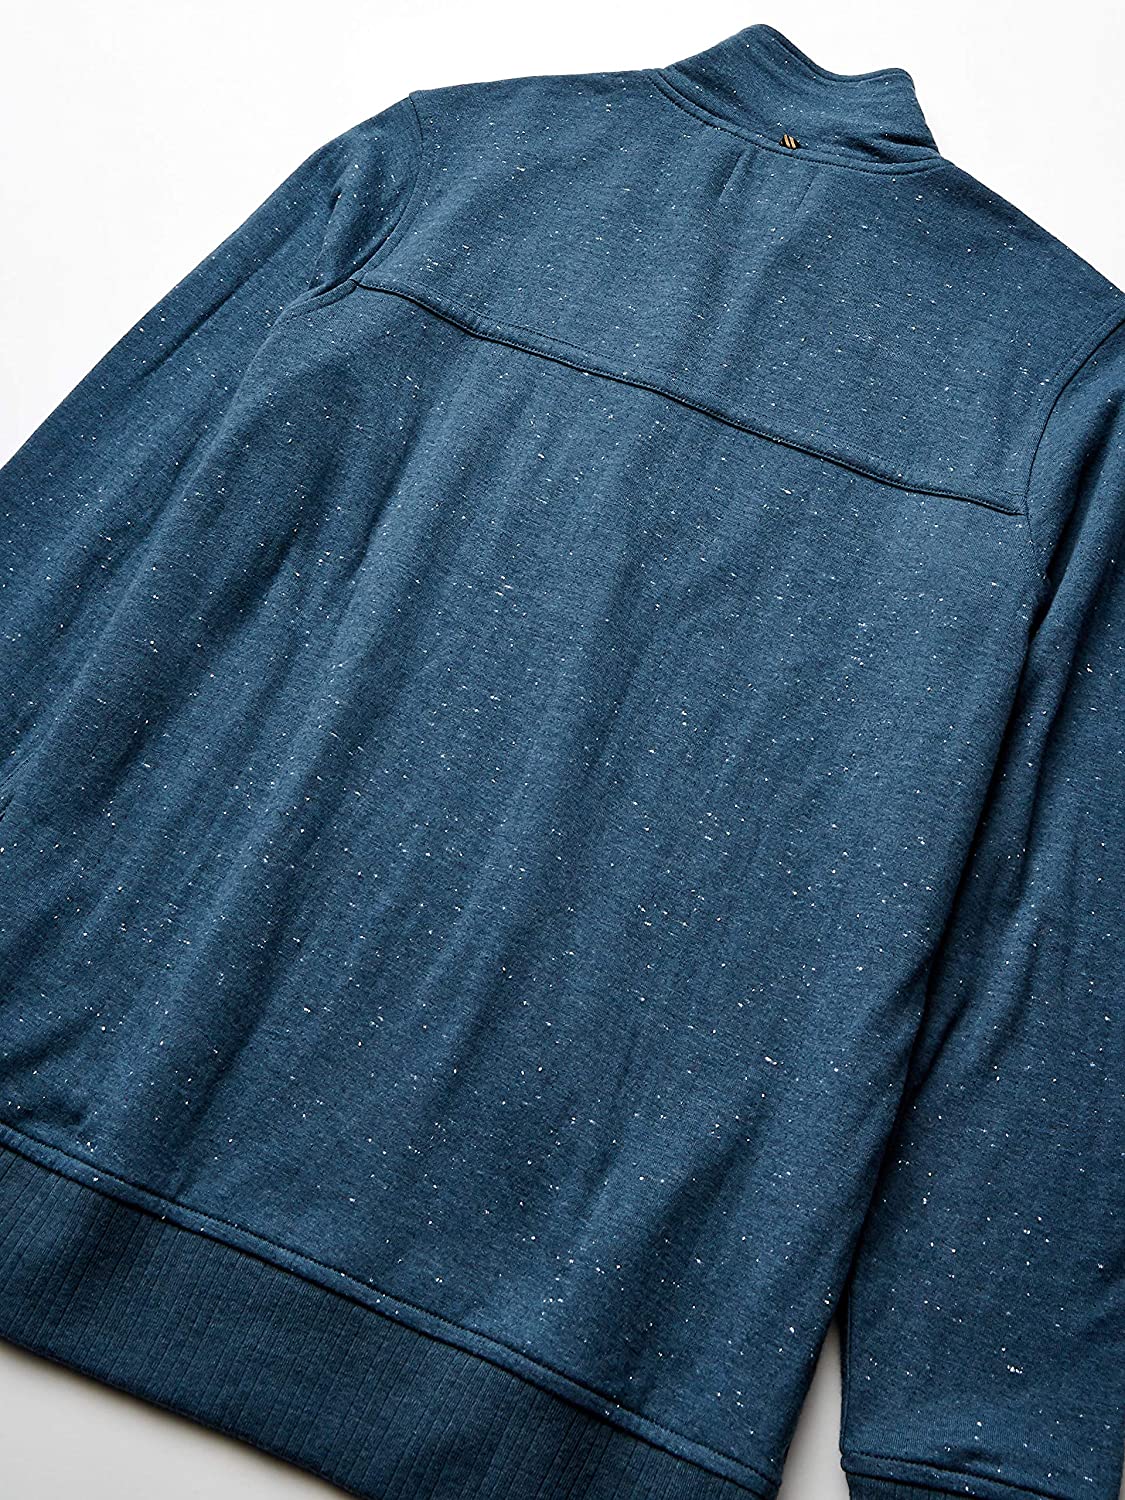 Billy Reid Mens Long Sleeve Donegal Half Zip Pullover Sweater